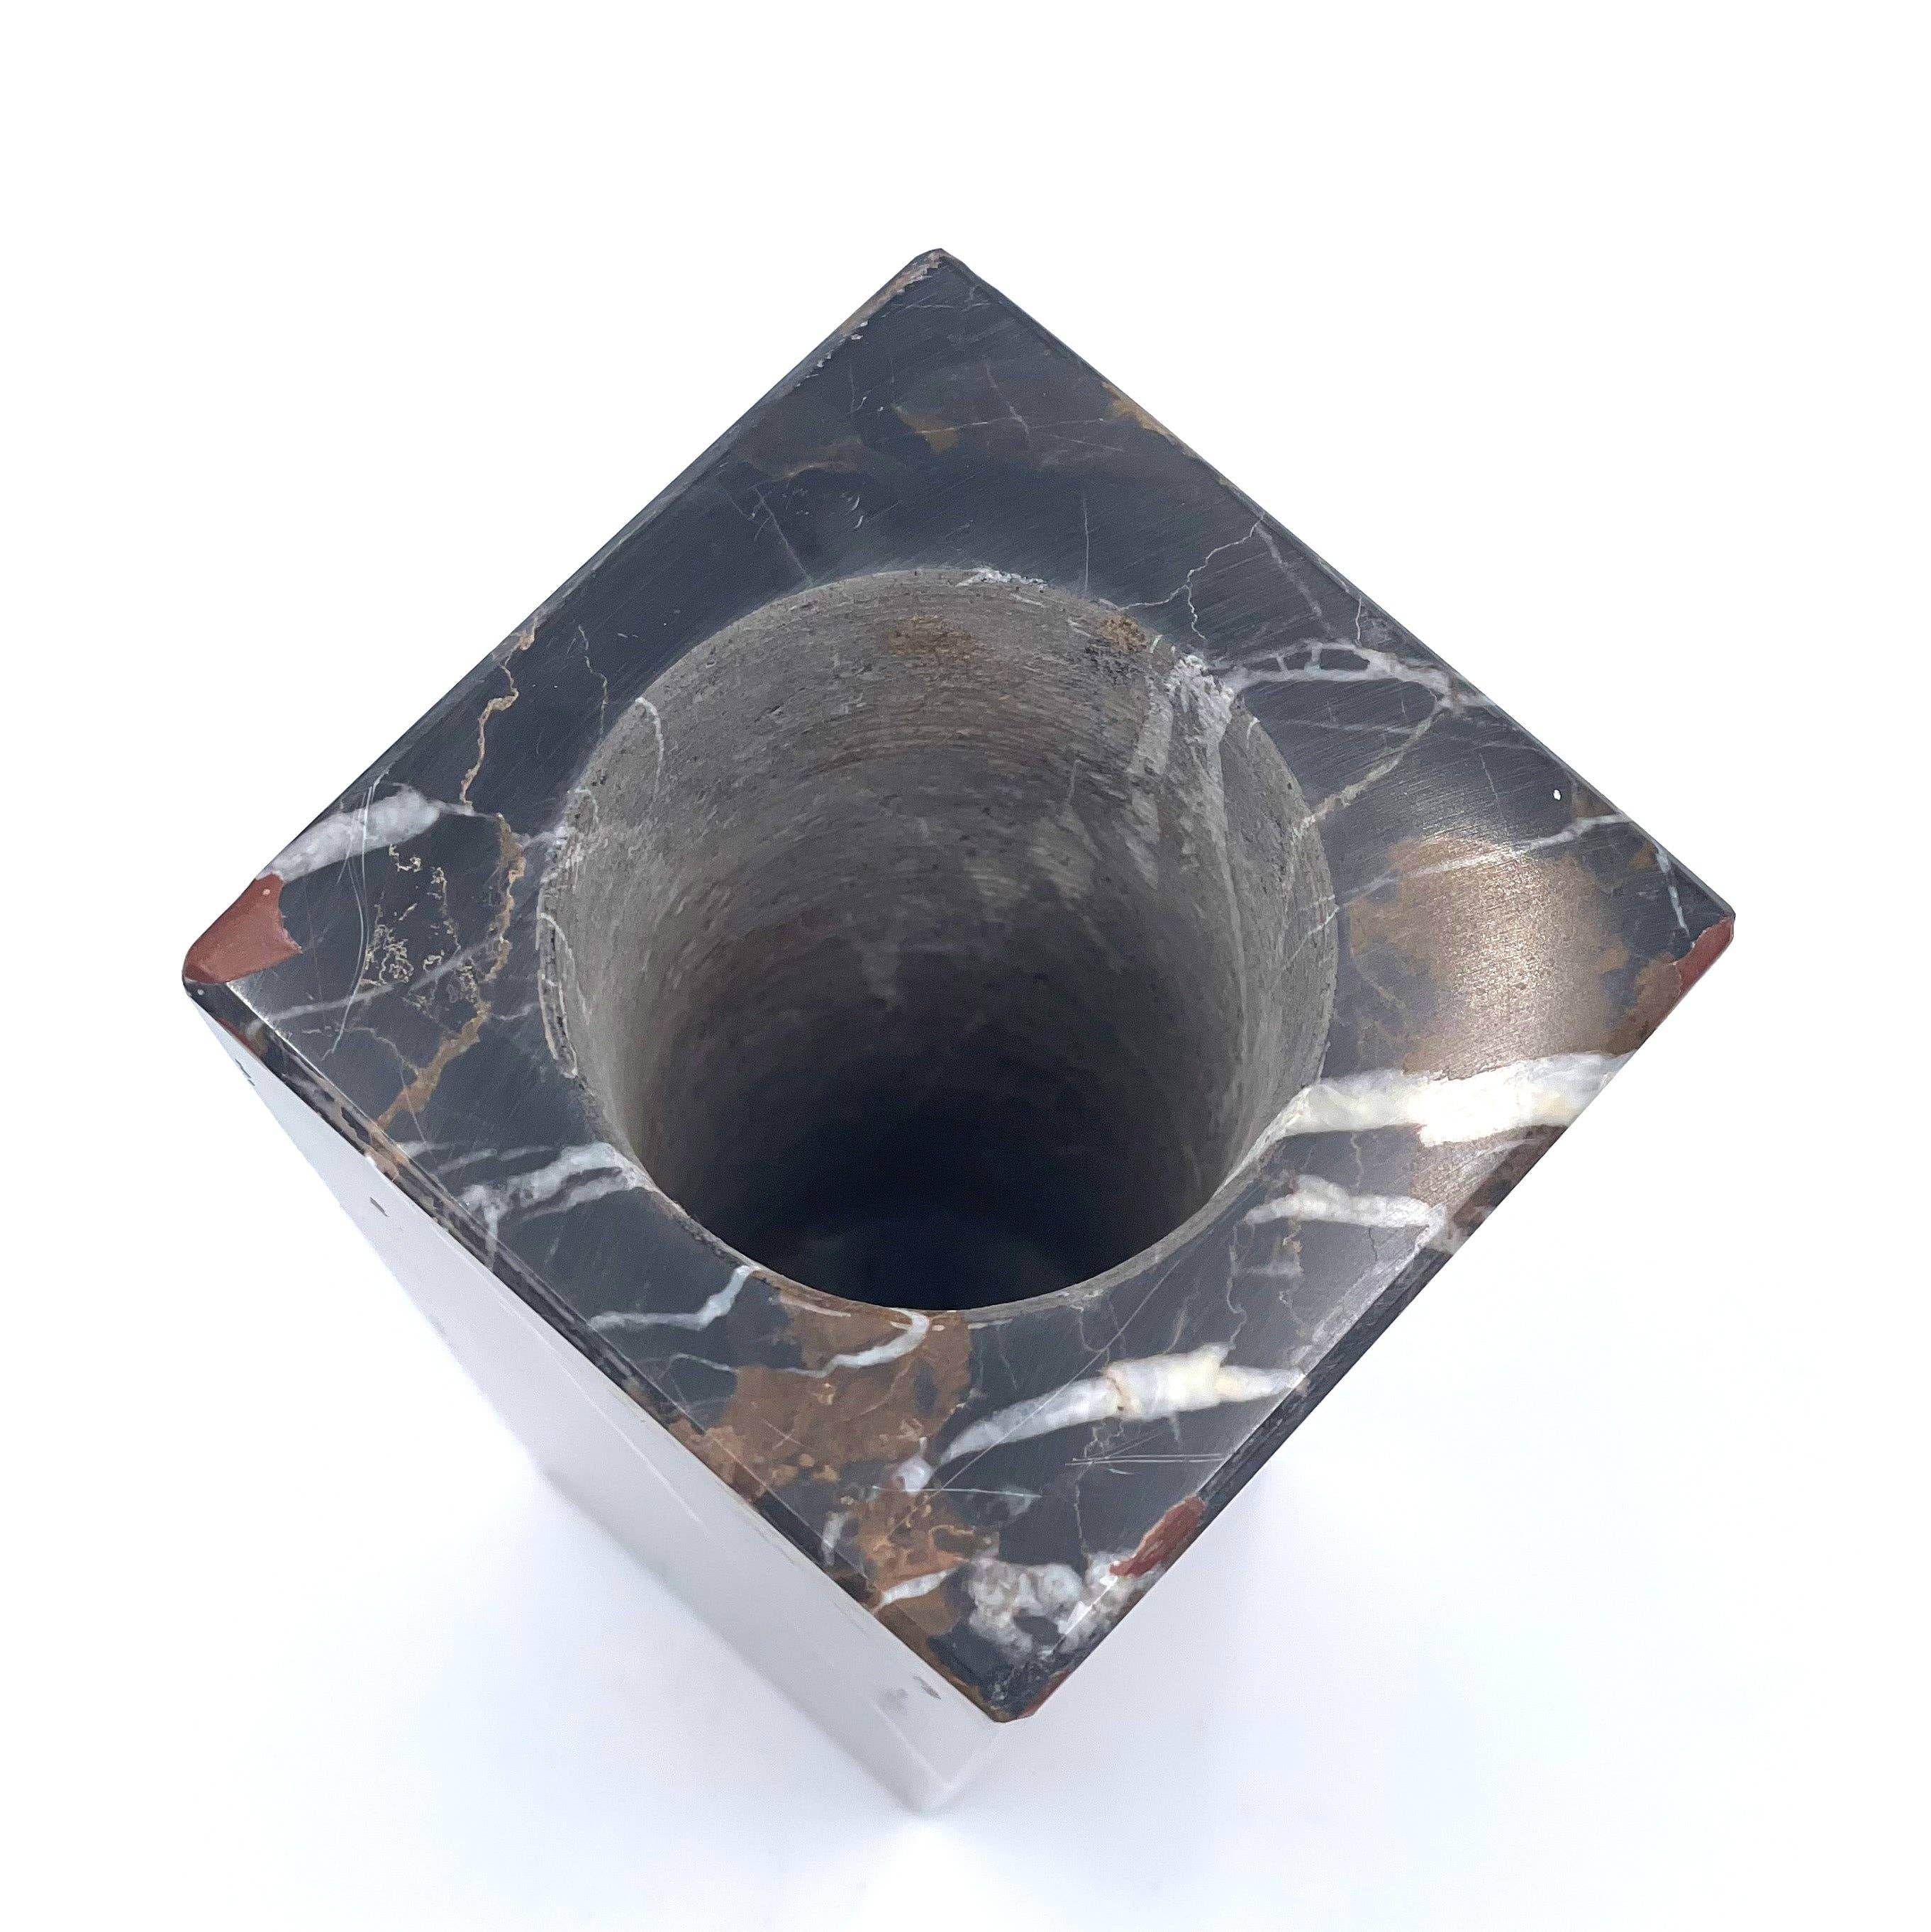 6" Square Vase - Marble and Onyx: White Onyx